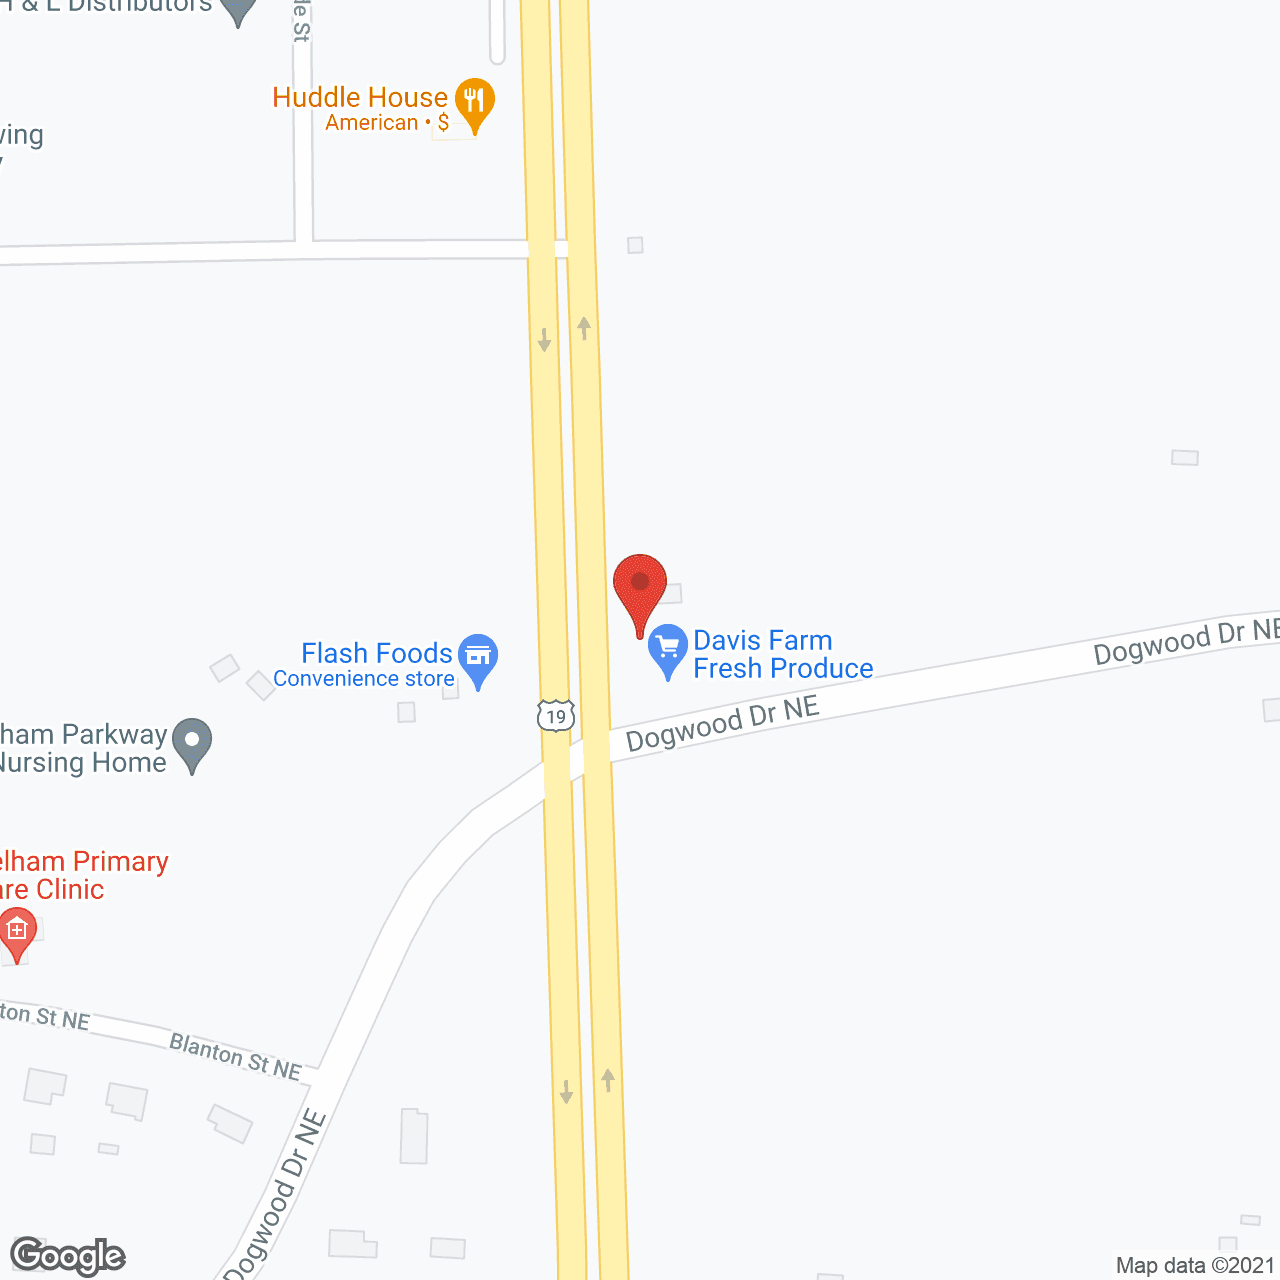 Pelham Parkway Nursing Home in google map